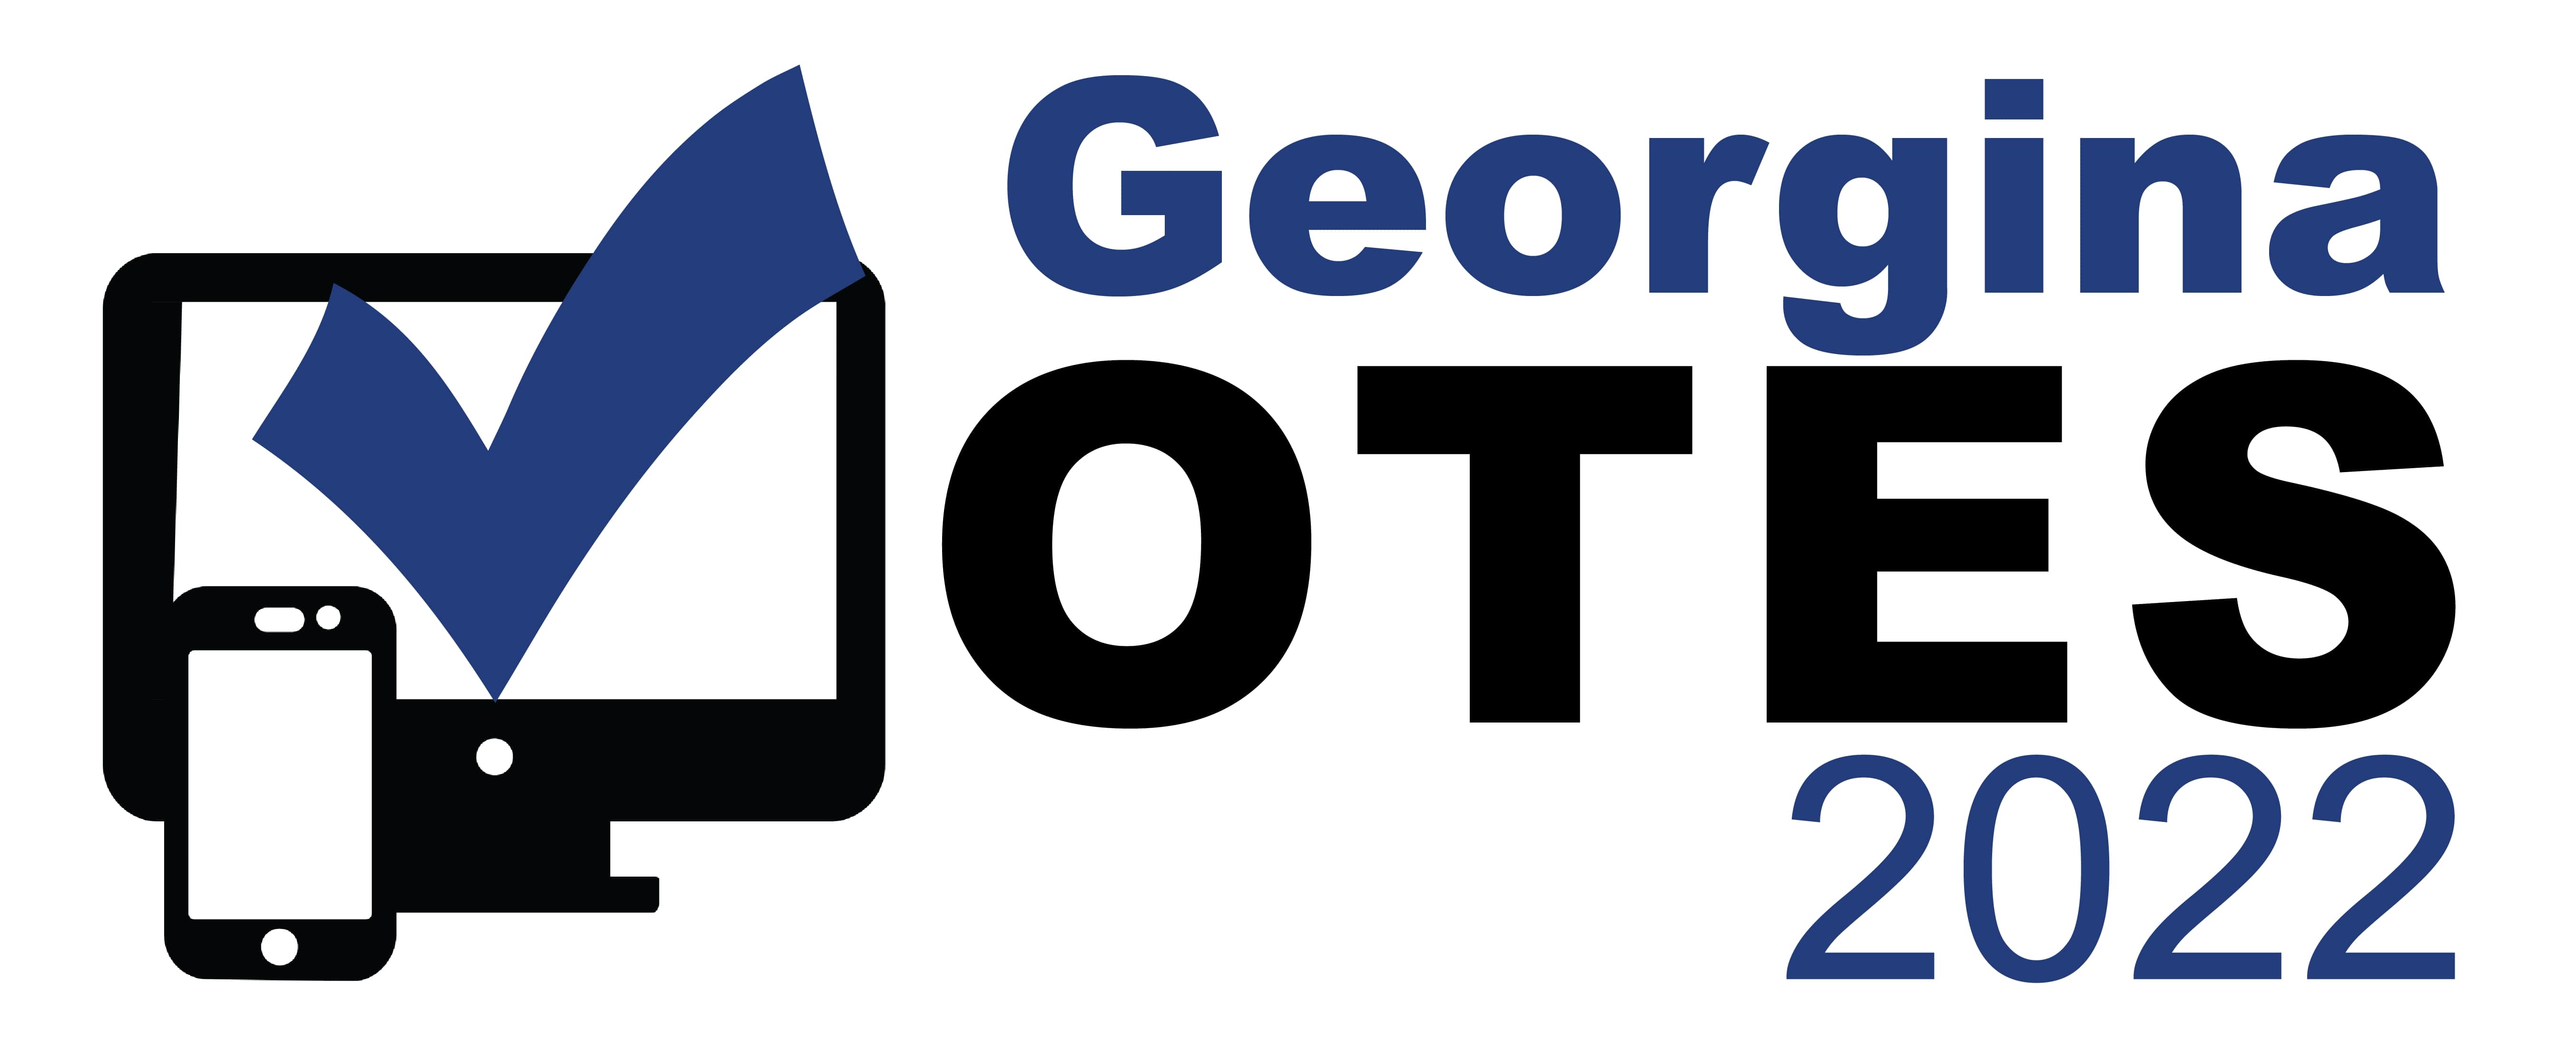 2022 election logo